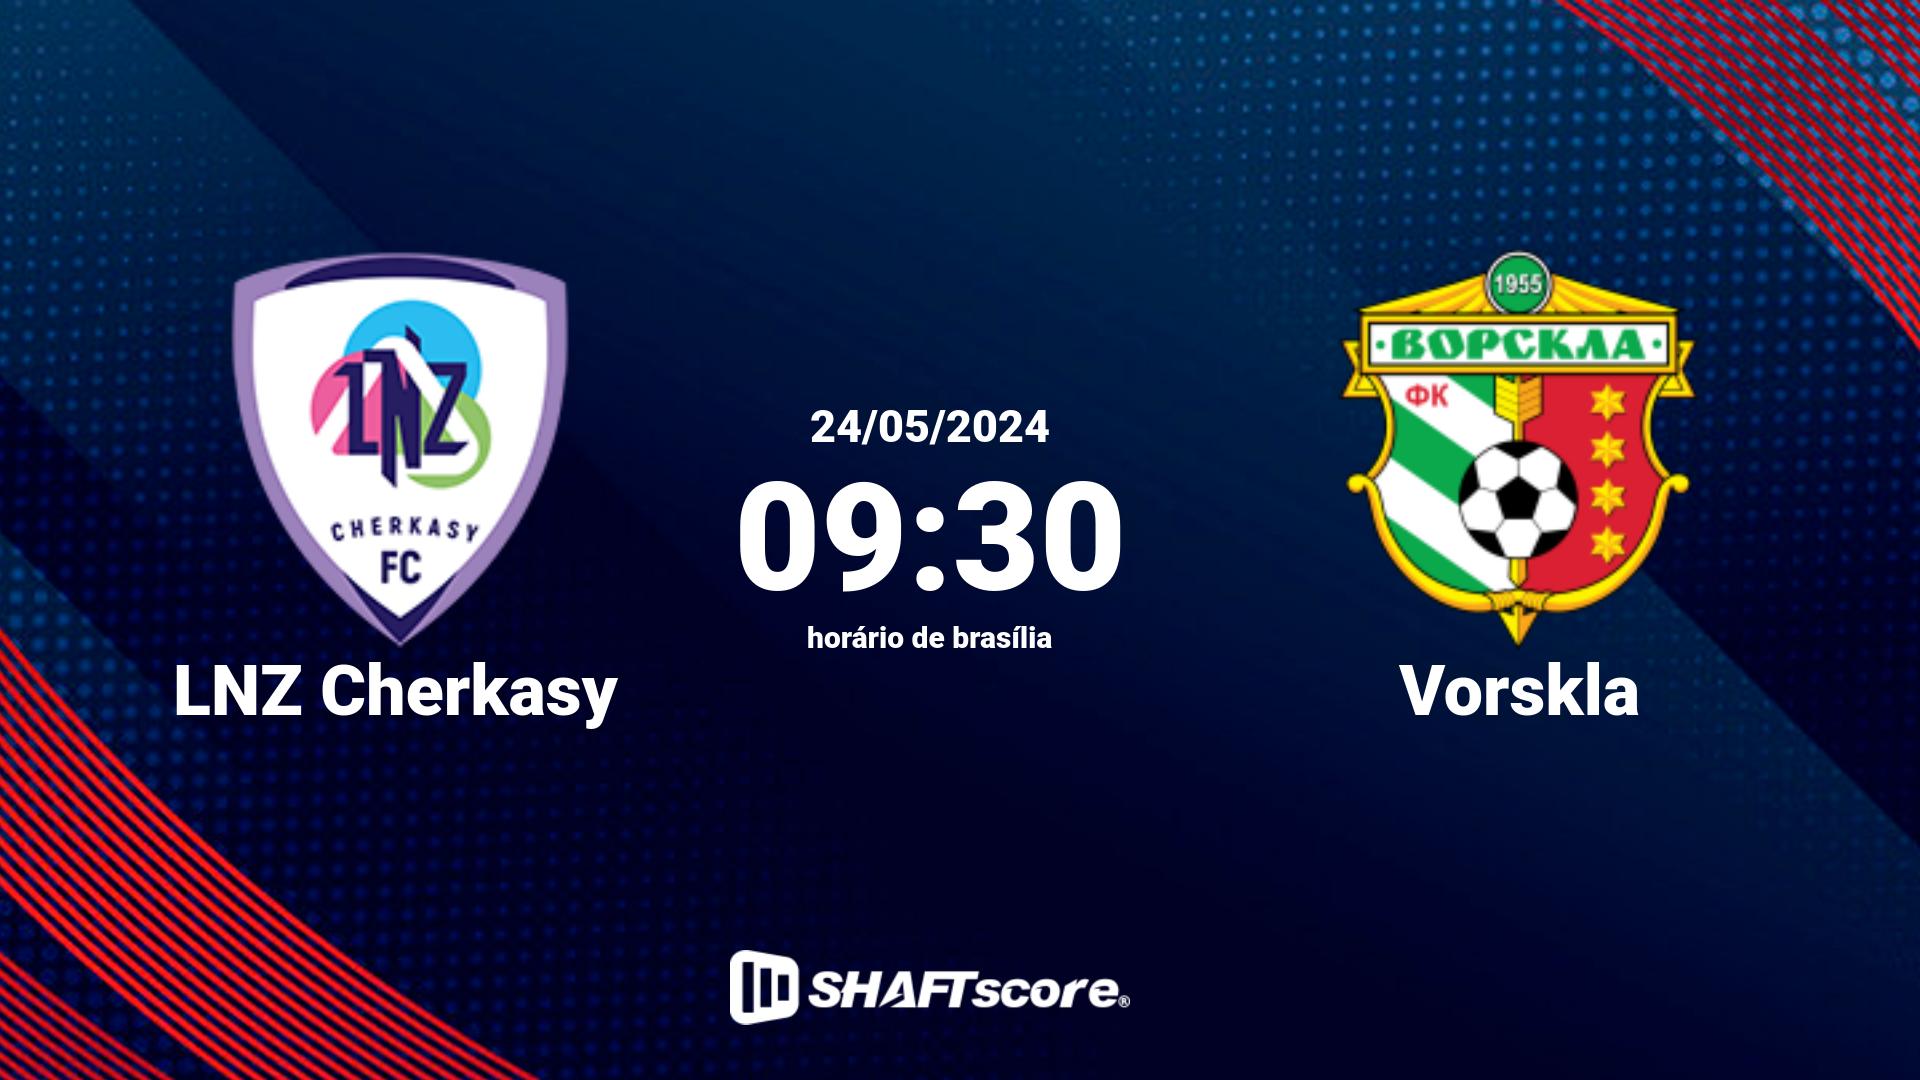 Estatísticas do jogo LNZ Cherkasy vs Vorskla 24.05 09:30